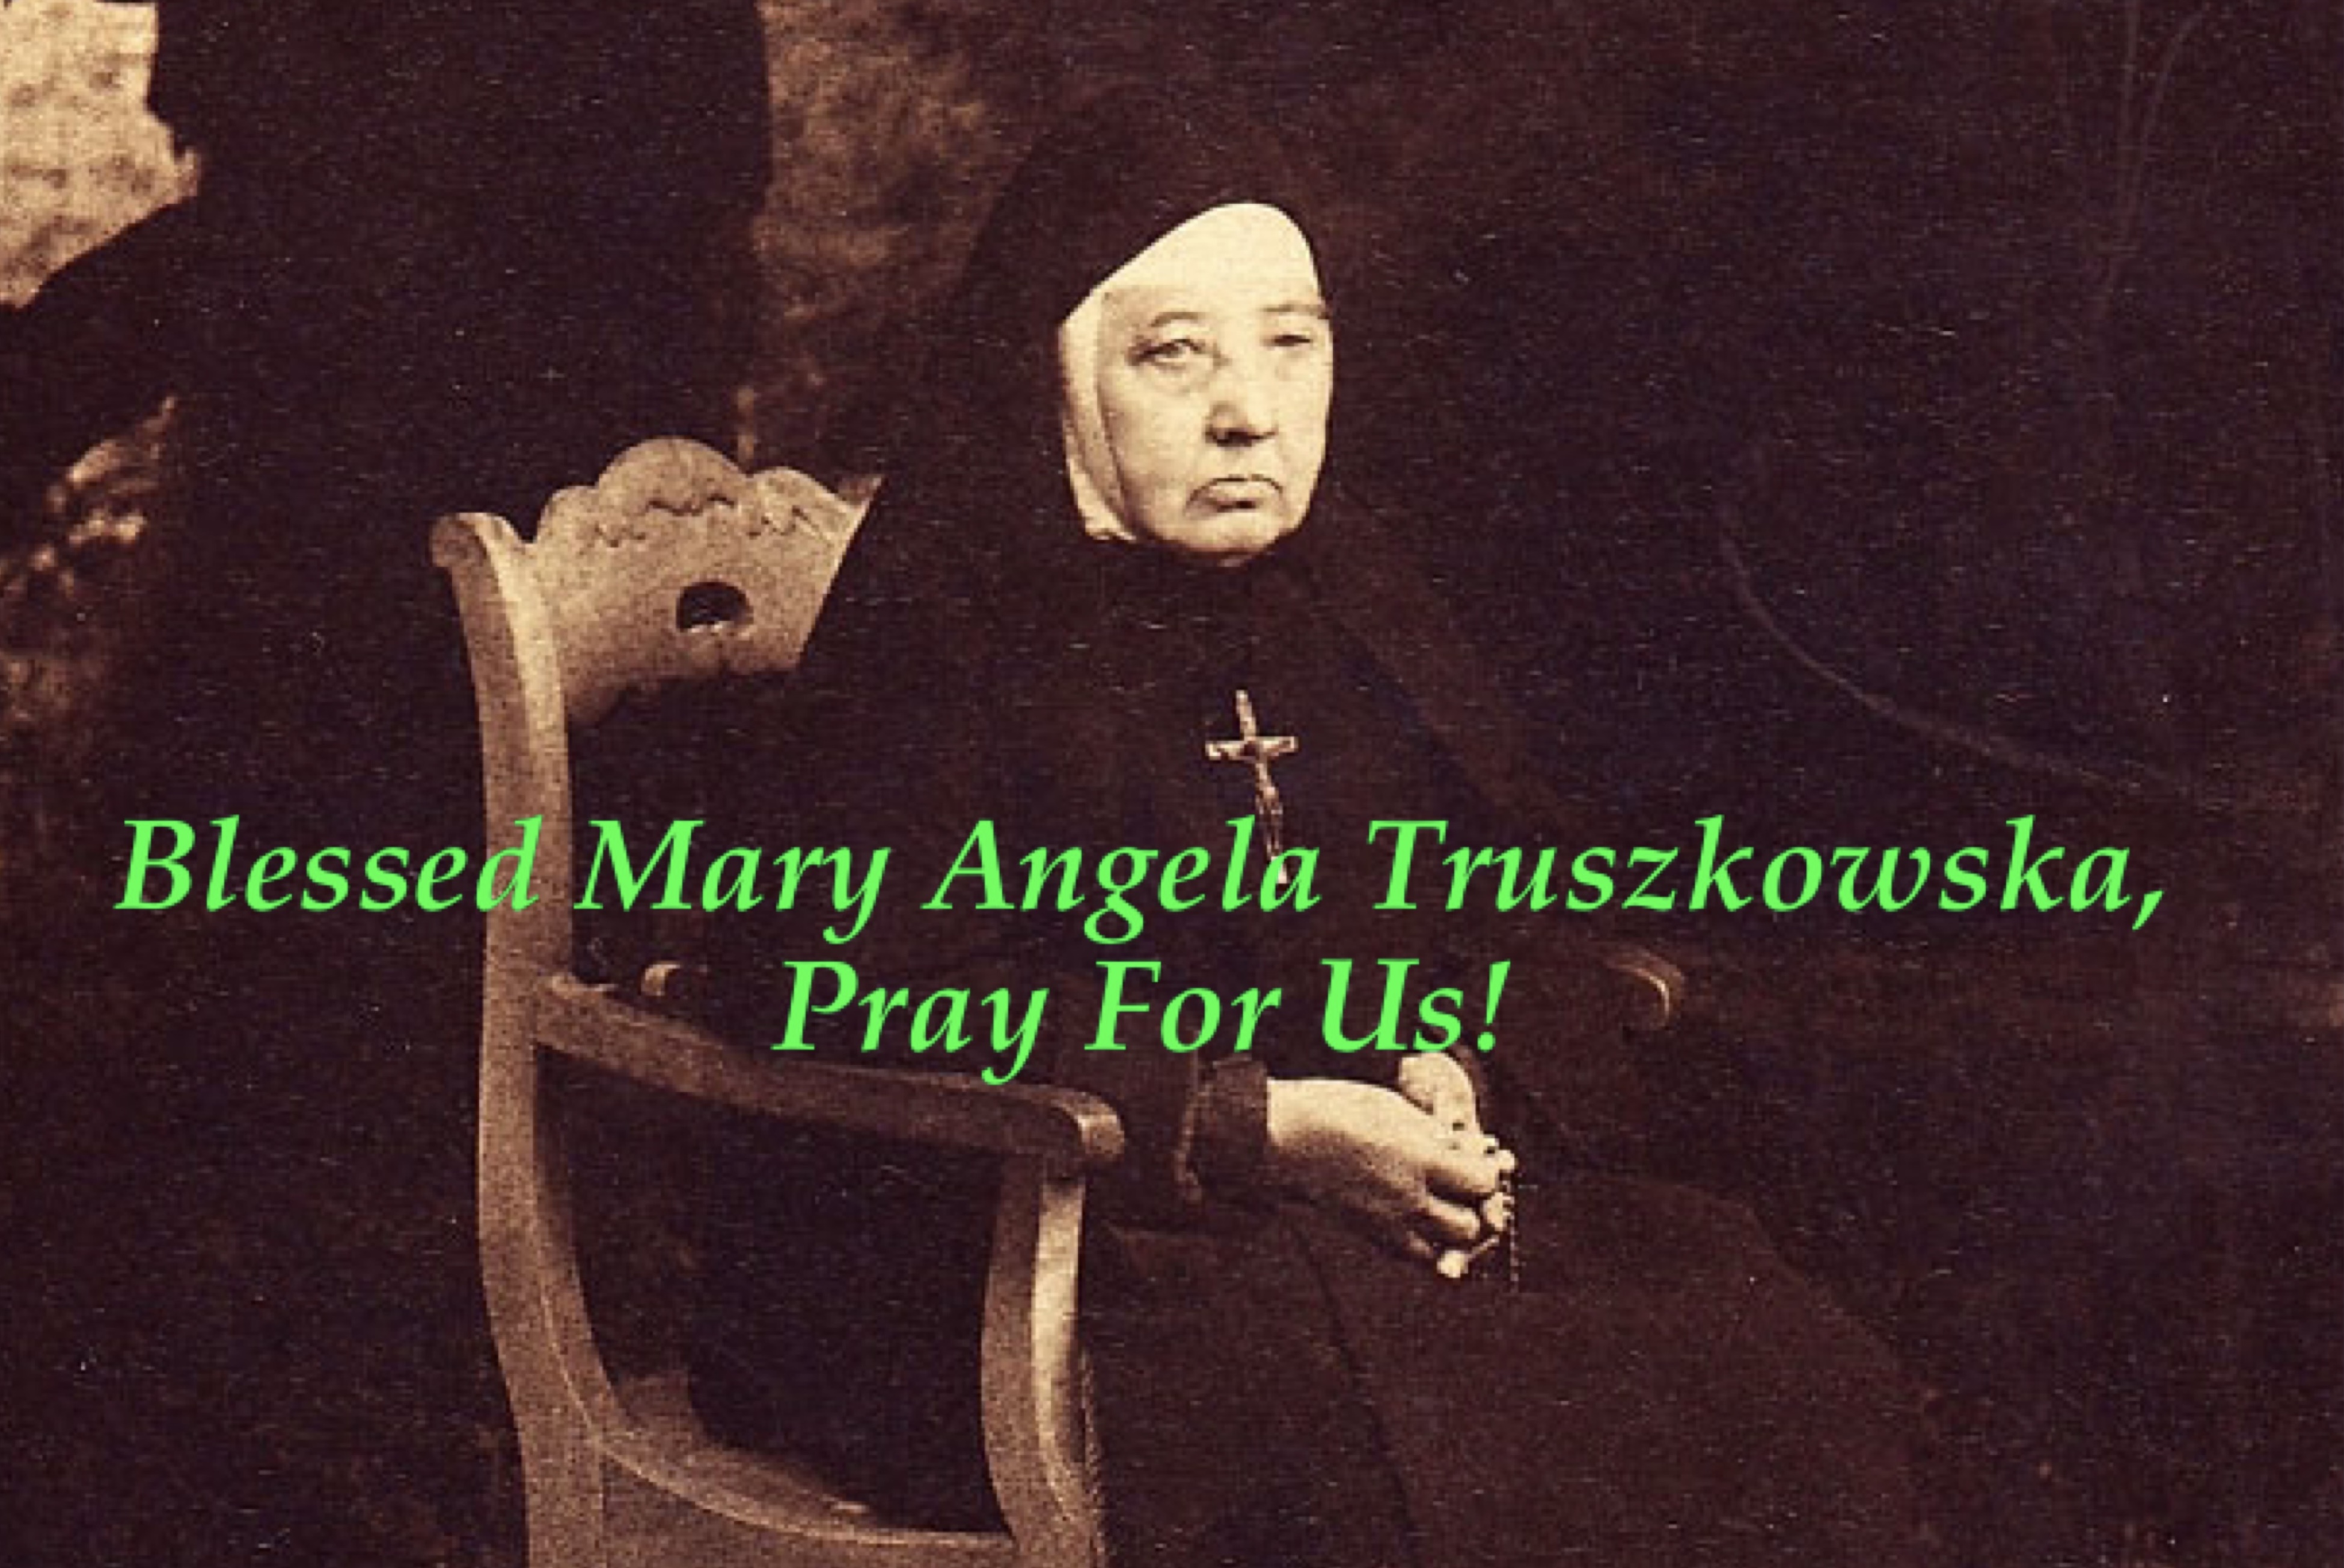 30th January - Blessed Mary Angela Truszkowska